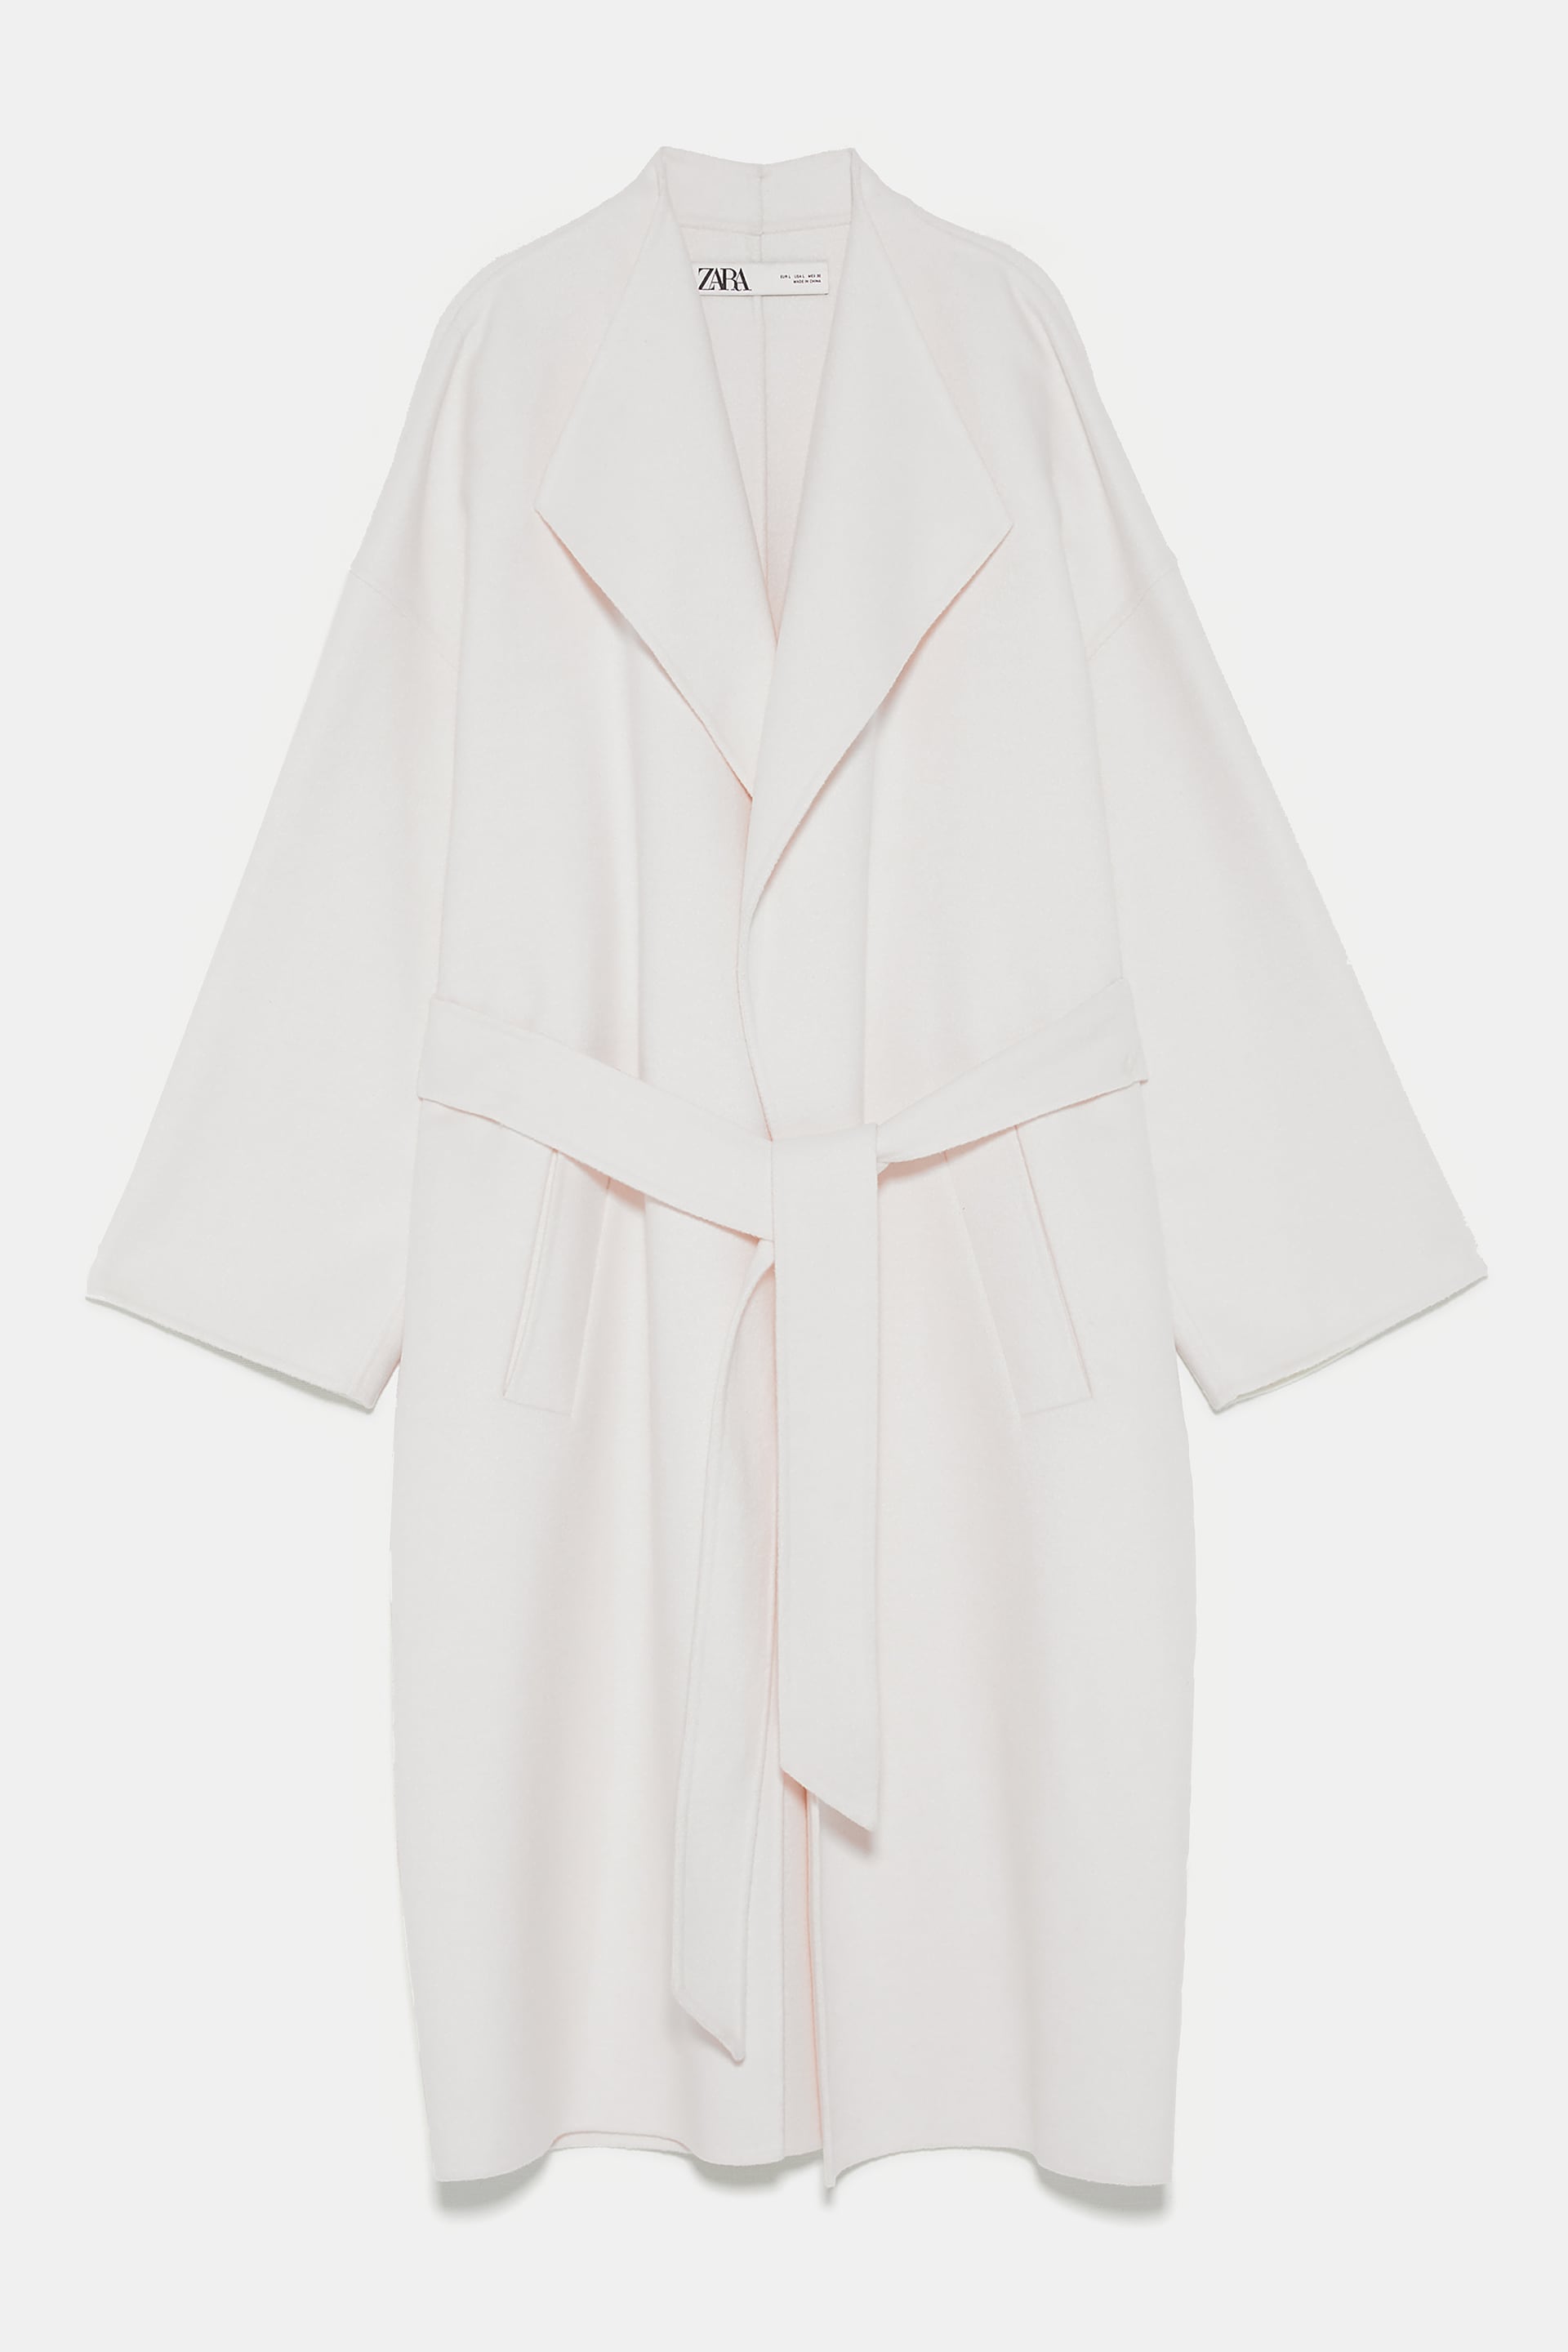 Zara white coat